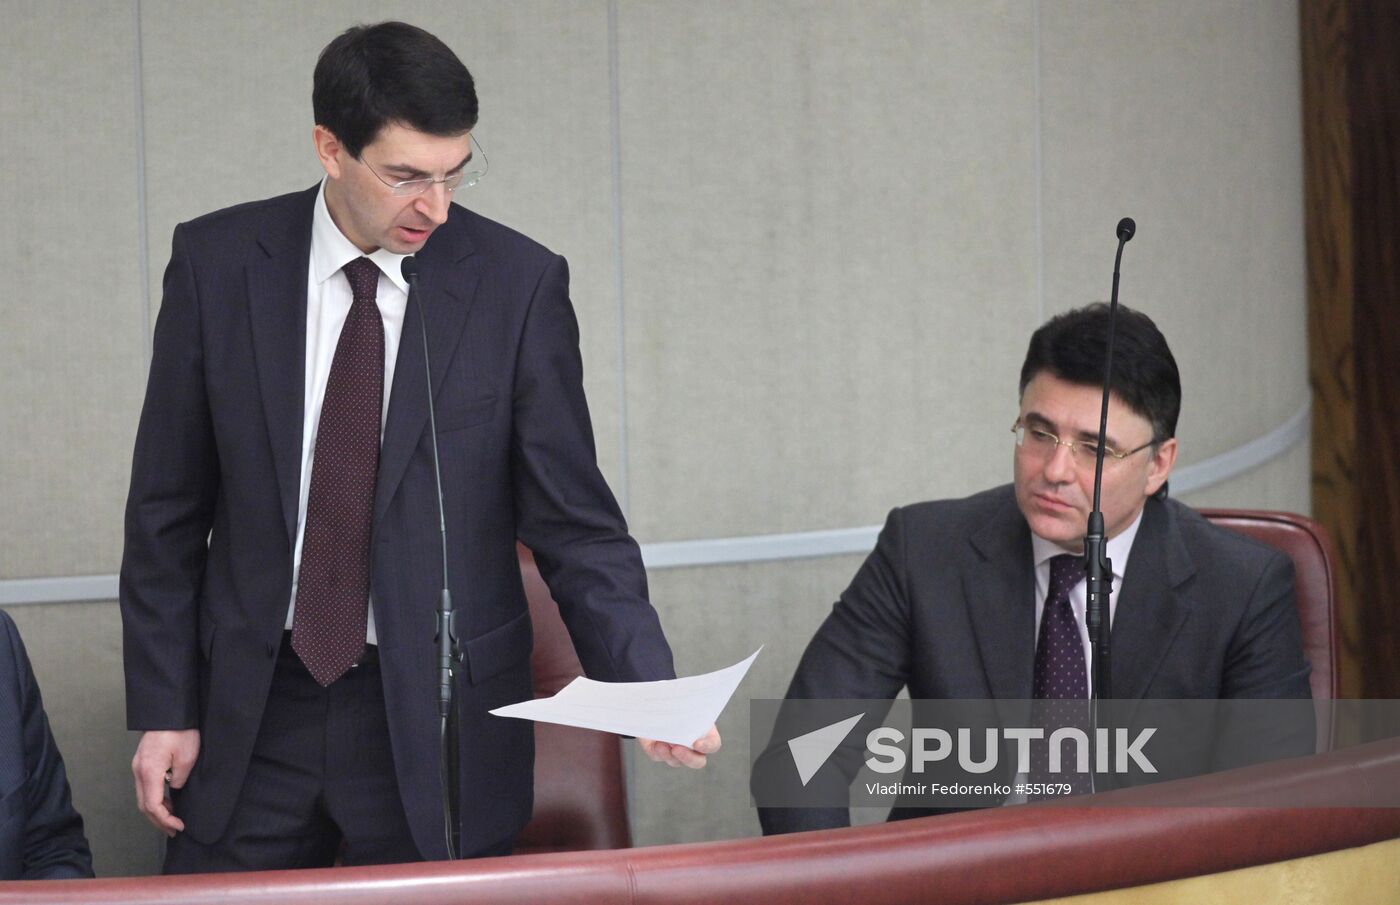 Plenary session of the Duma on January 20, 2010